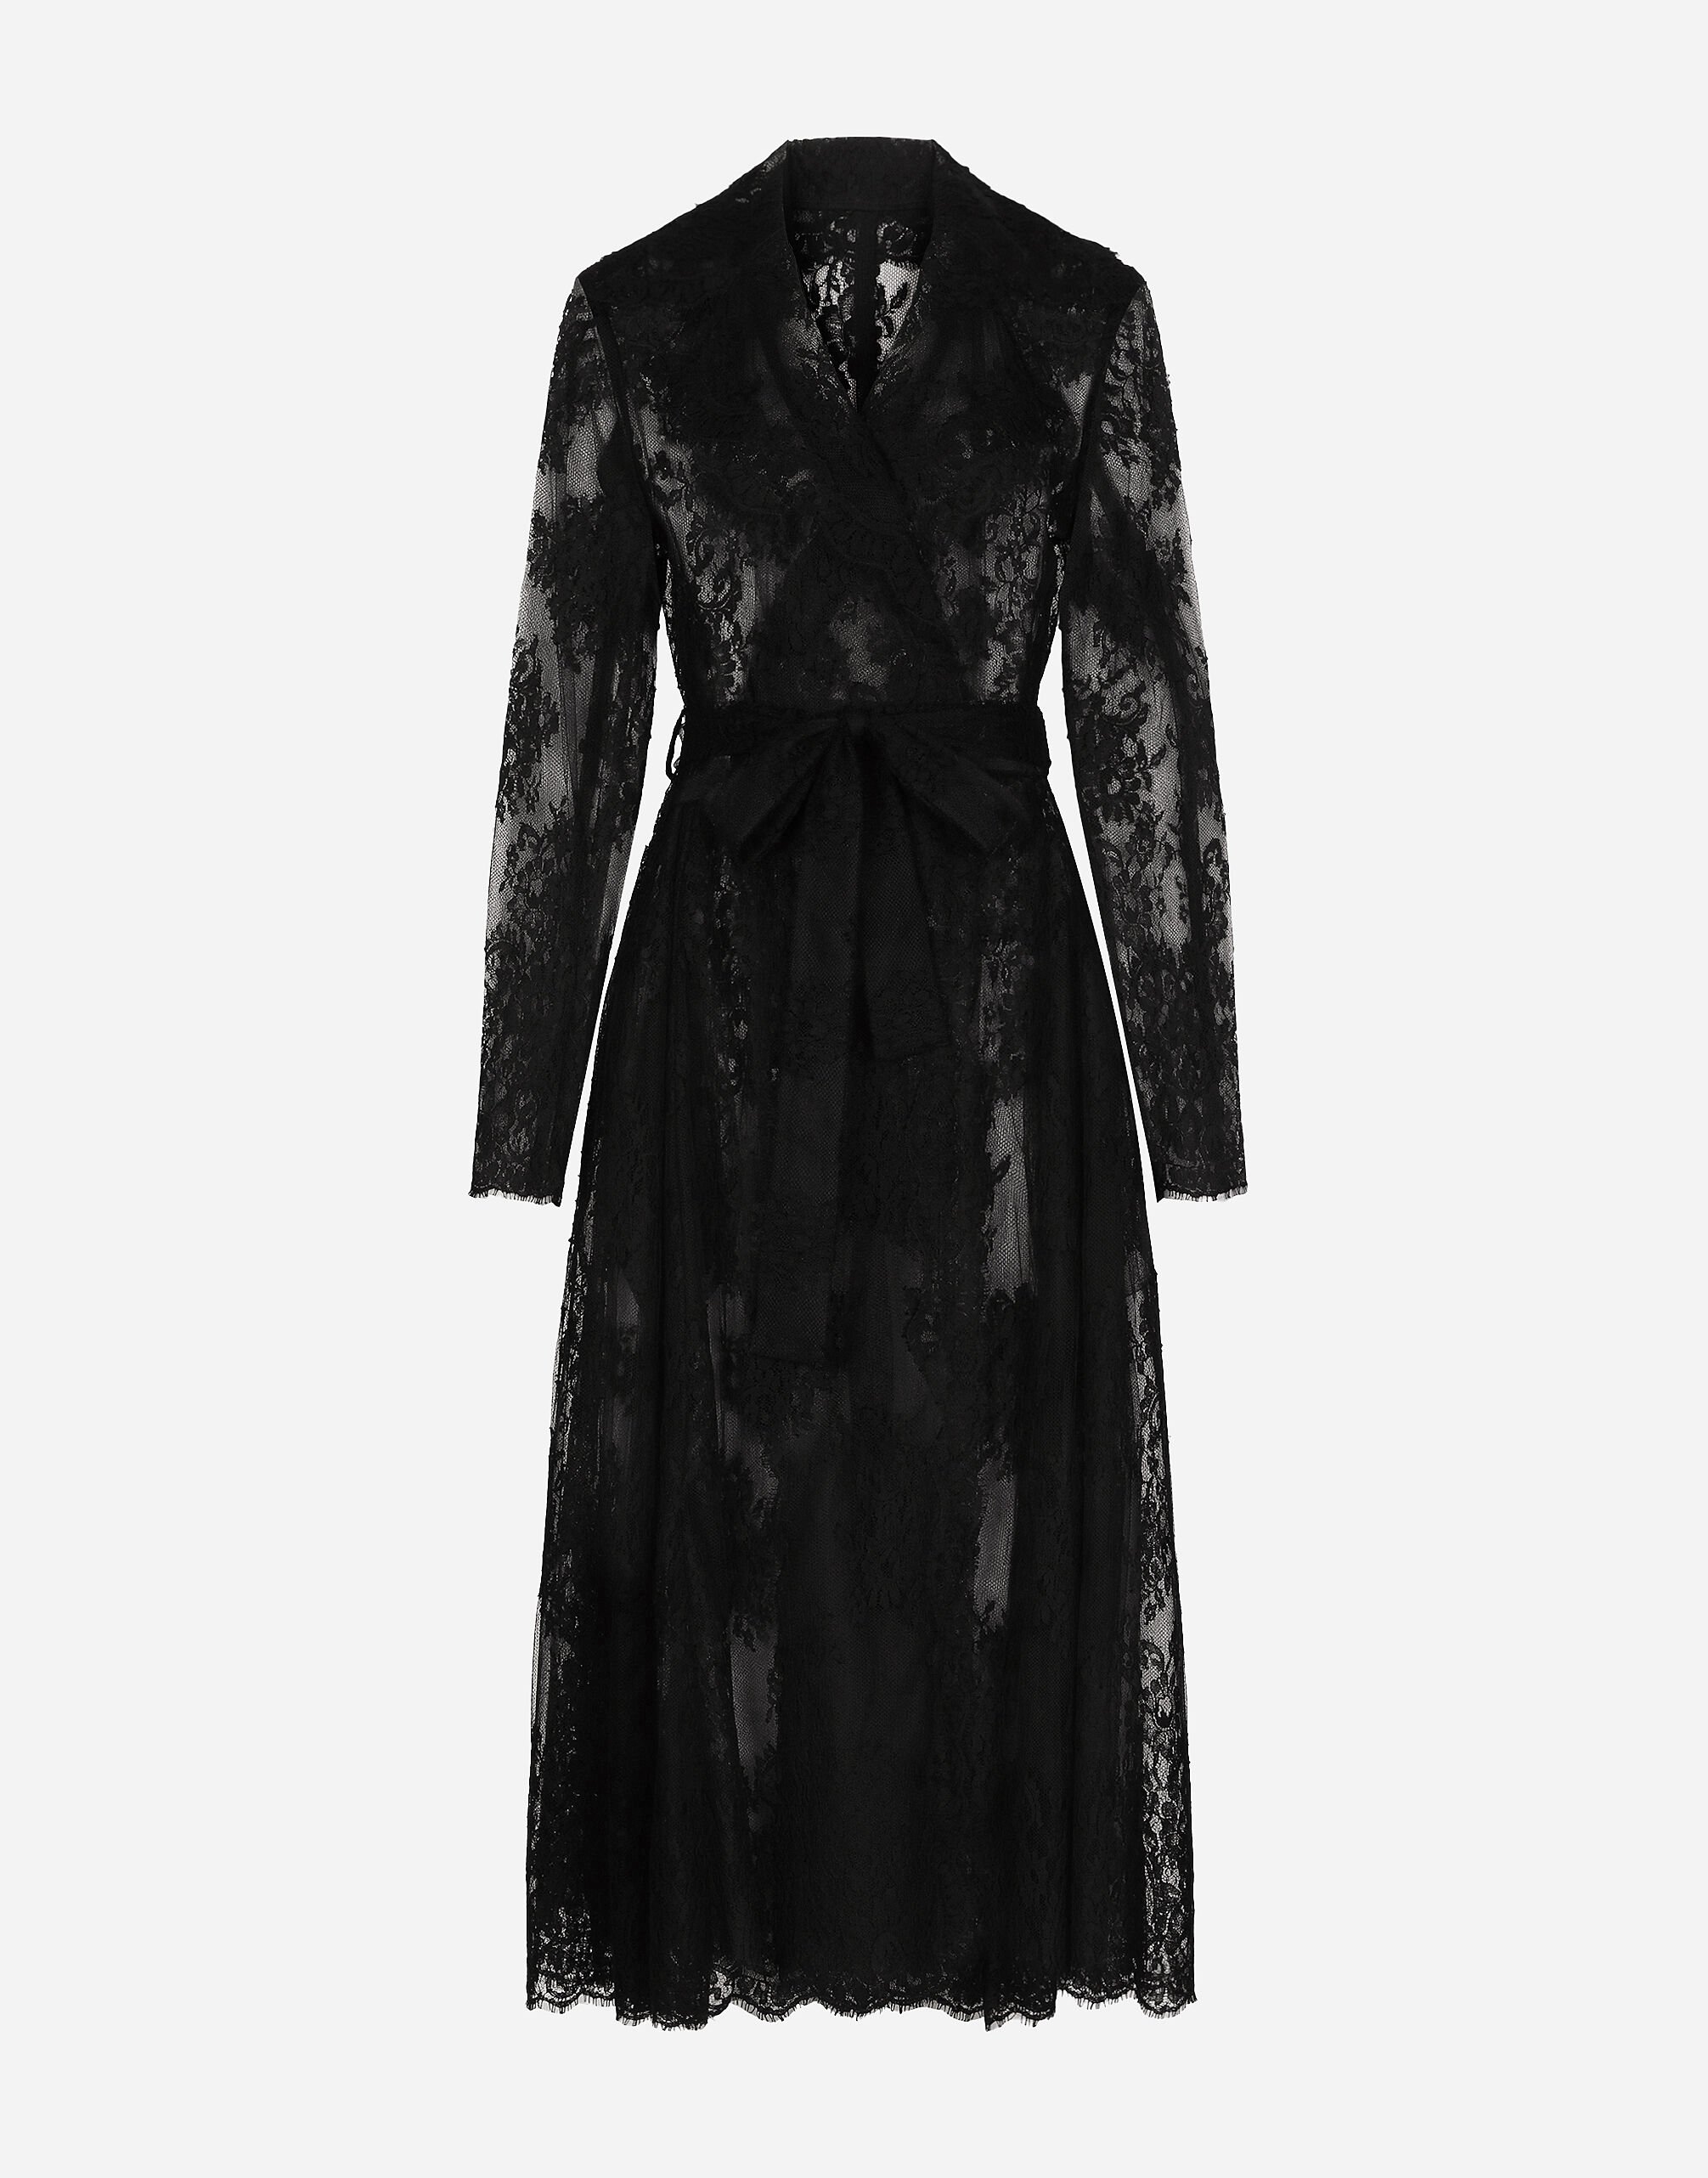 Dolce & Gabbana Chantilly lace coat with belt Print F0E1YTIS1VH